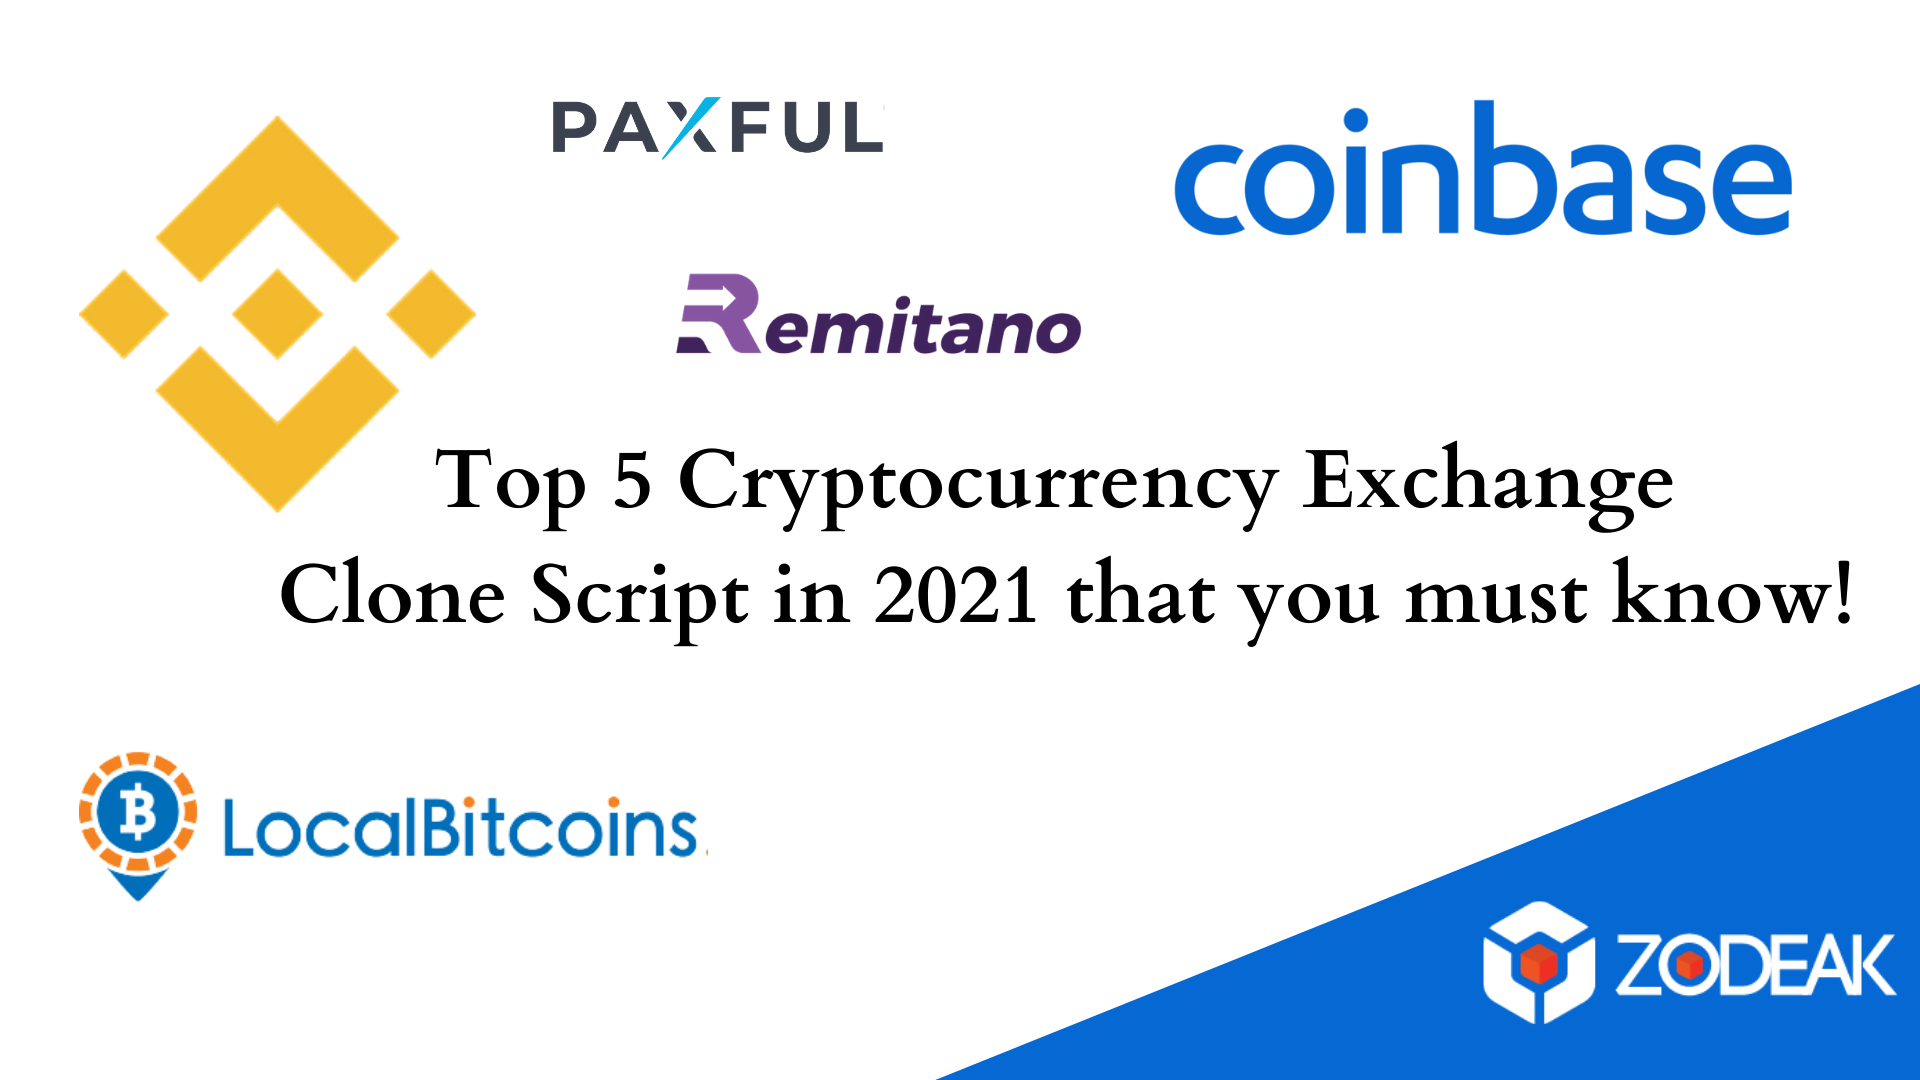 Top 5 Cryptocurrency Exchange Clone Script in 2021 | Zodeak